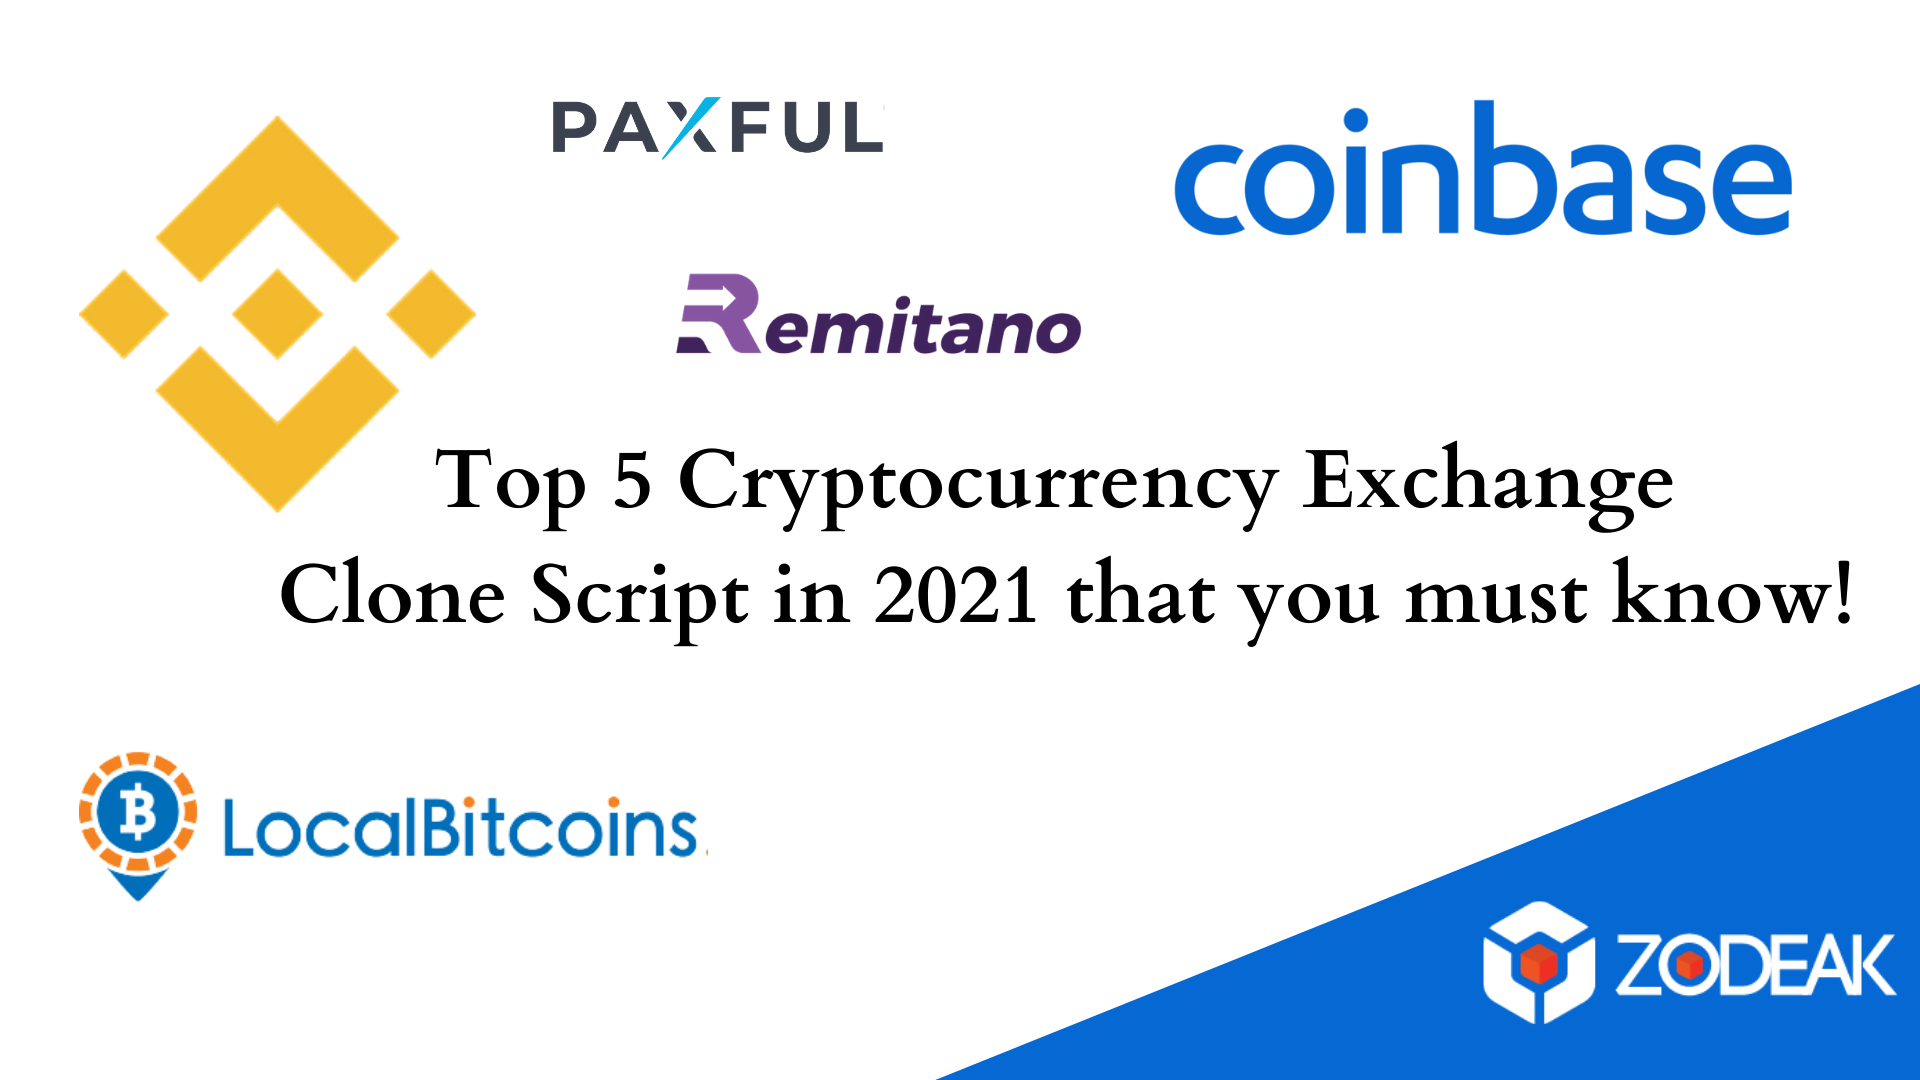 Top 5 Cryptocurrency Exchange Clone Script in 2021 | Zodeak